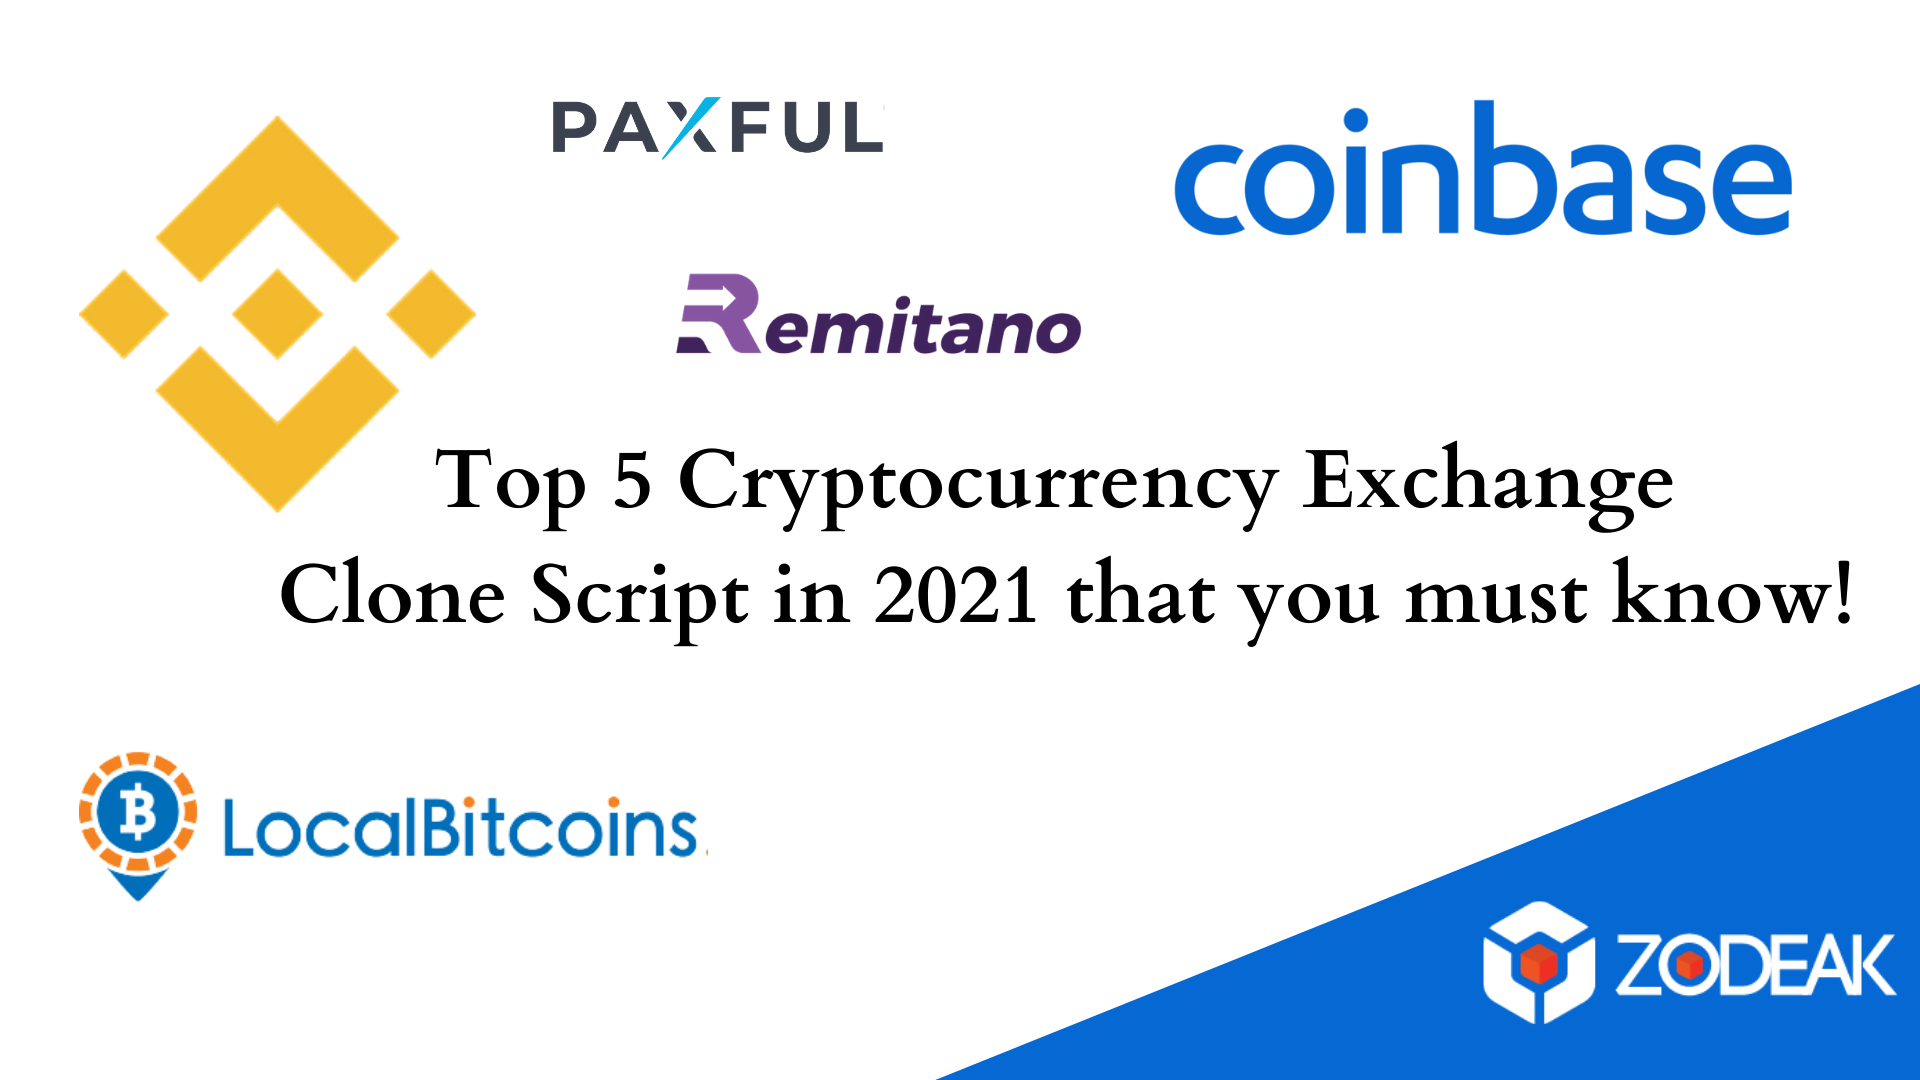 Top 5 Cryptocurrency Exchange Clone Script in 2021 | Zodeak